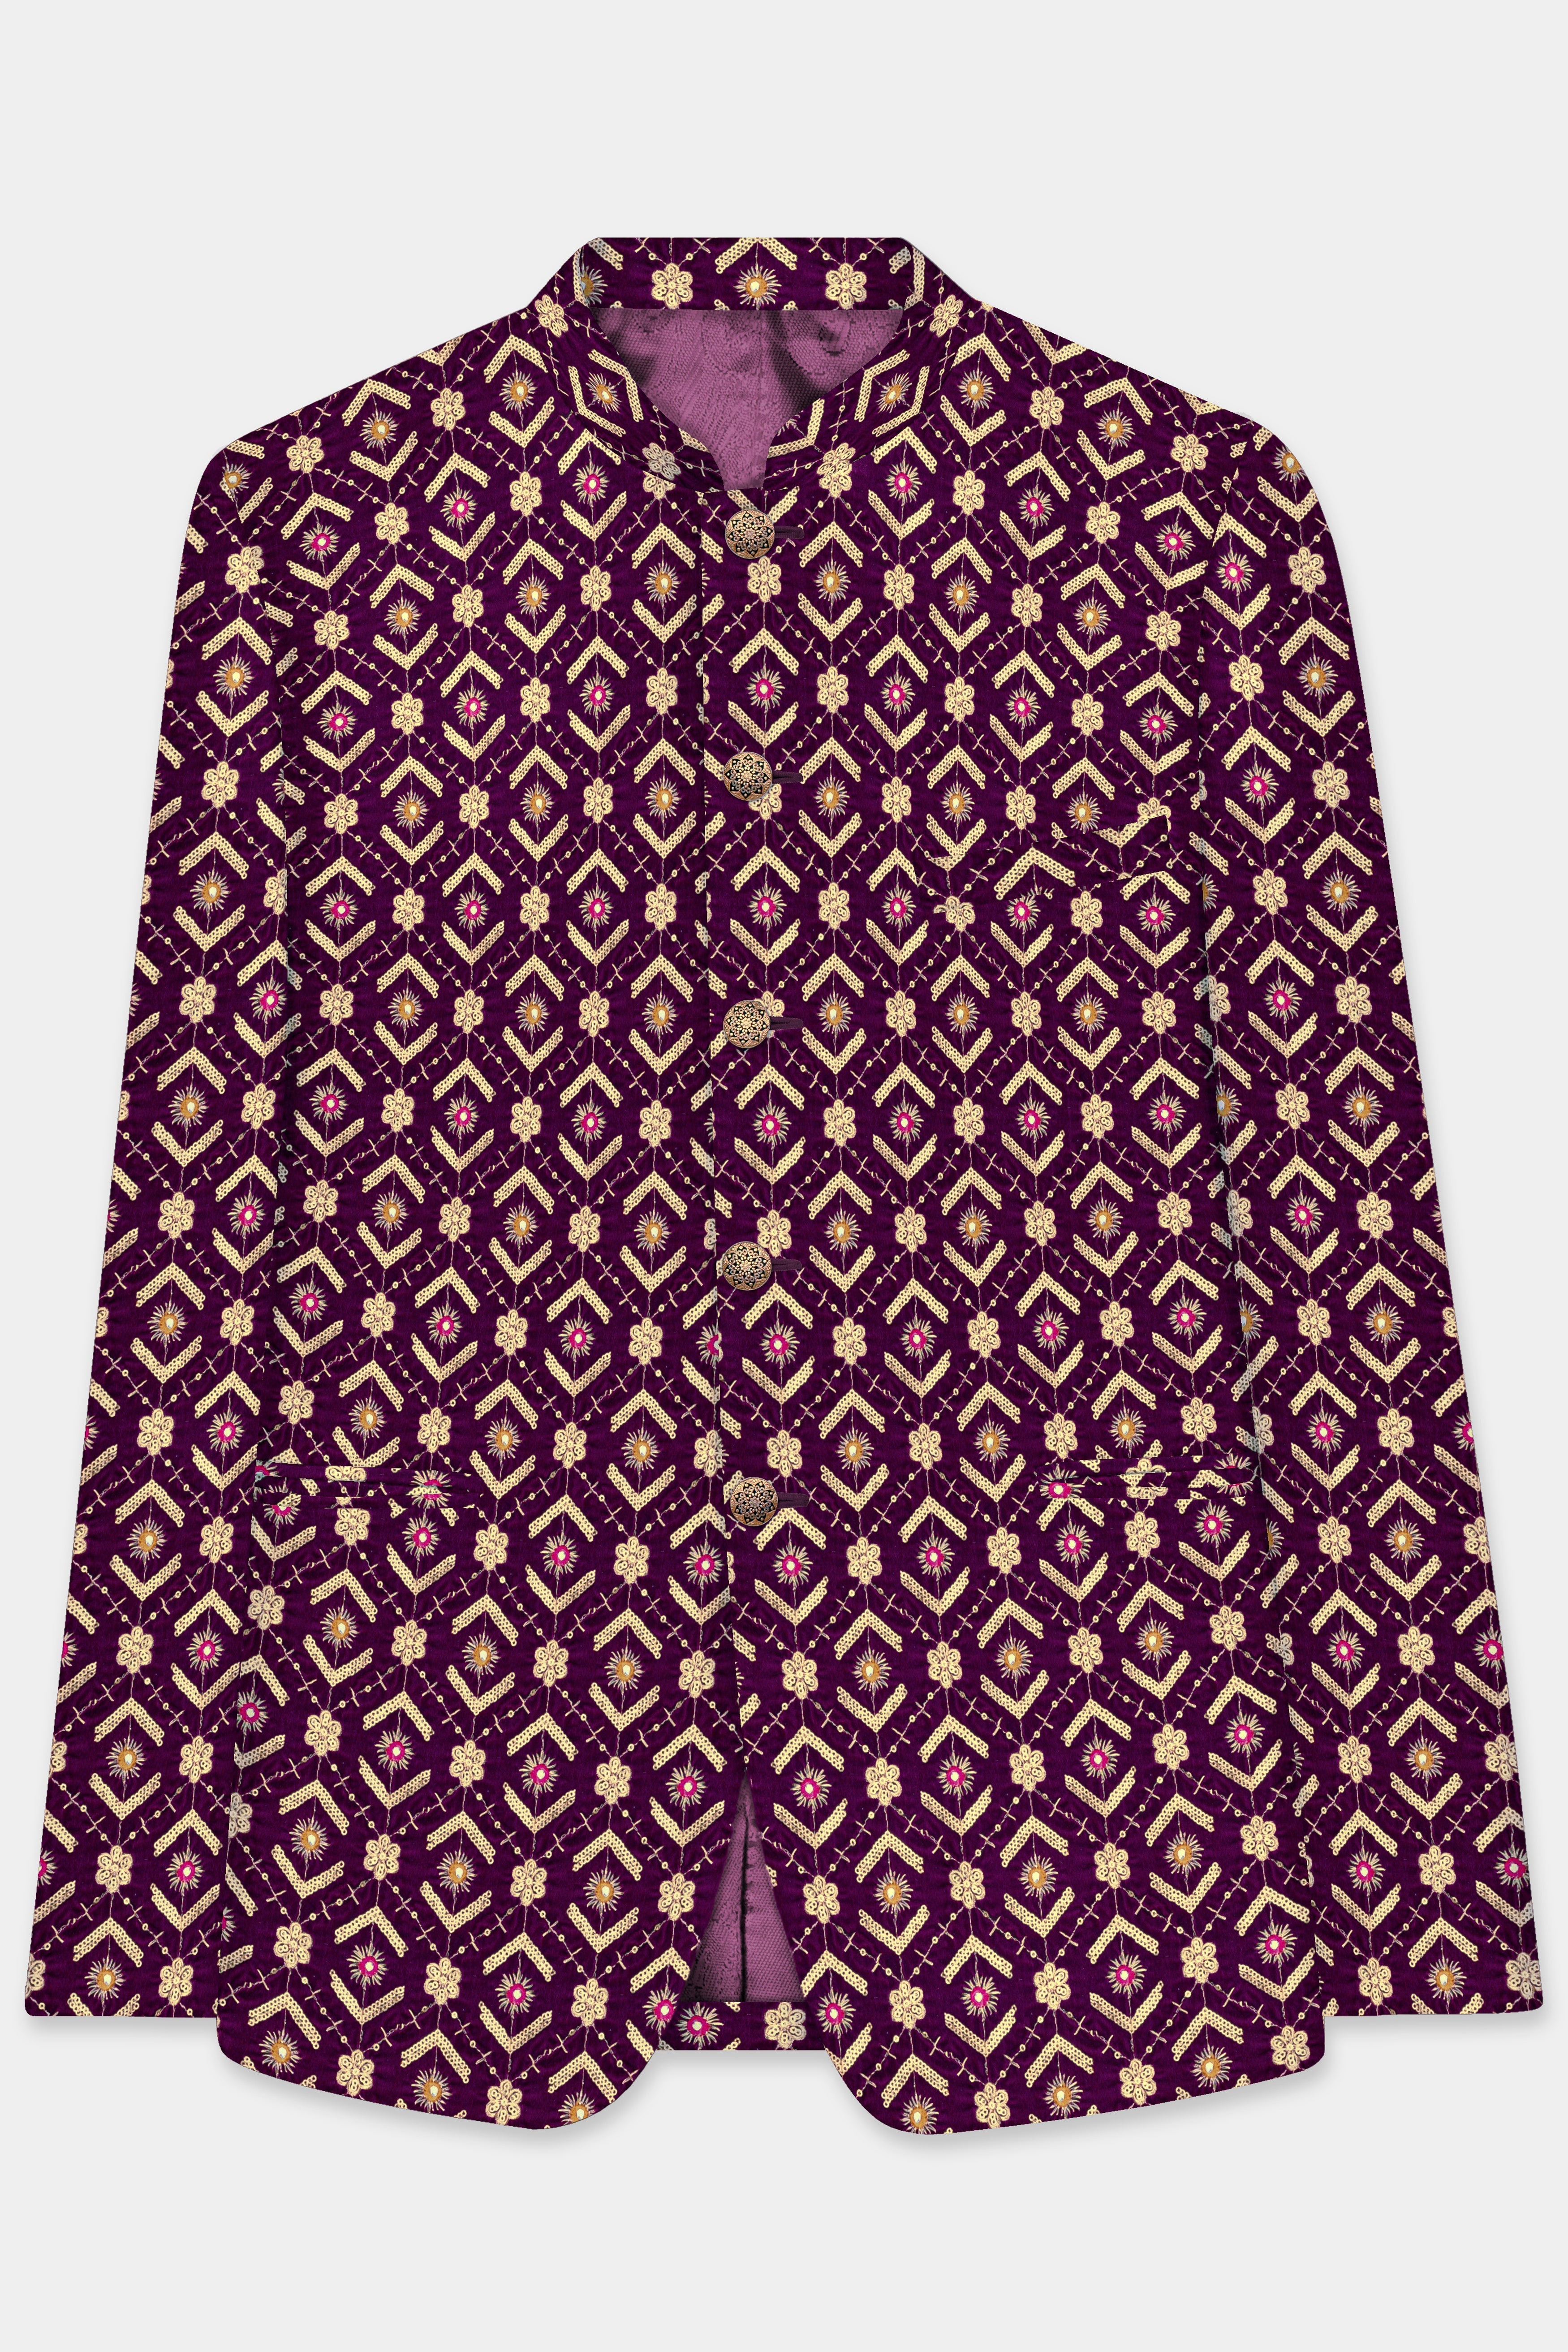 Blackberry Purple Velvet Thread And Sequin Embroidered Bandhgala Jodhpuri